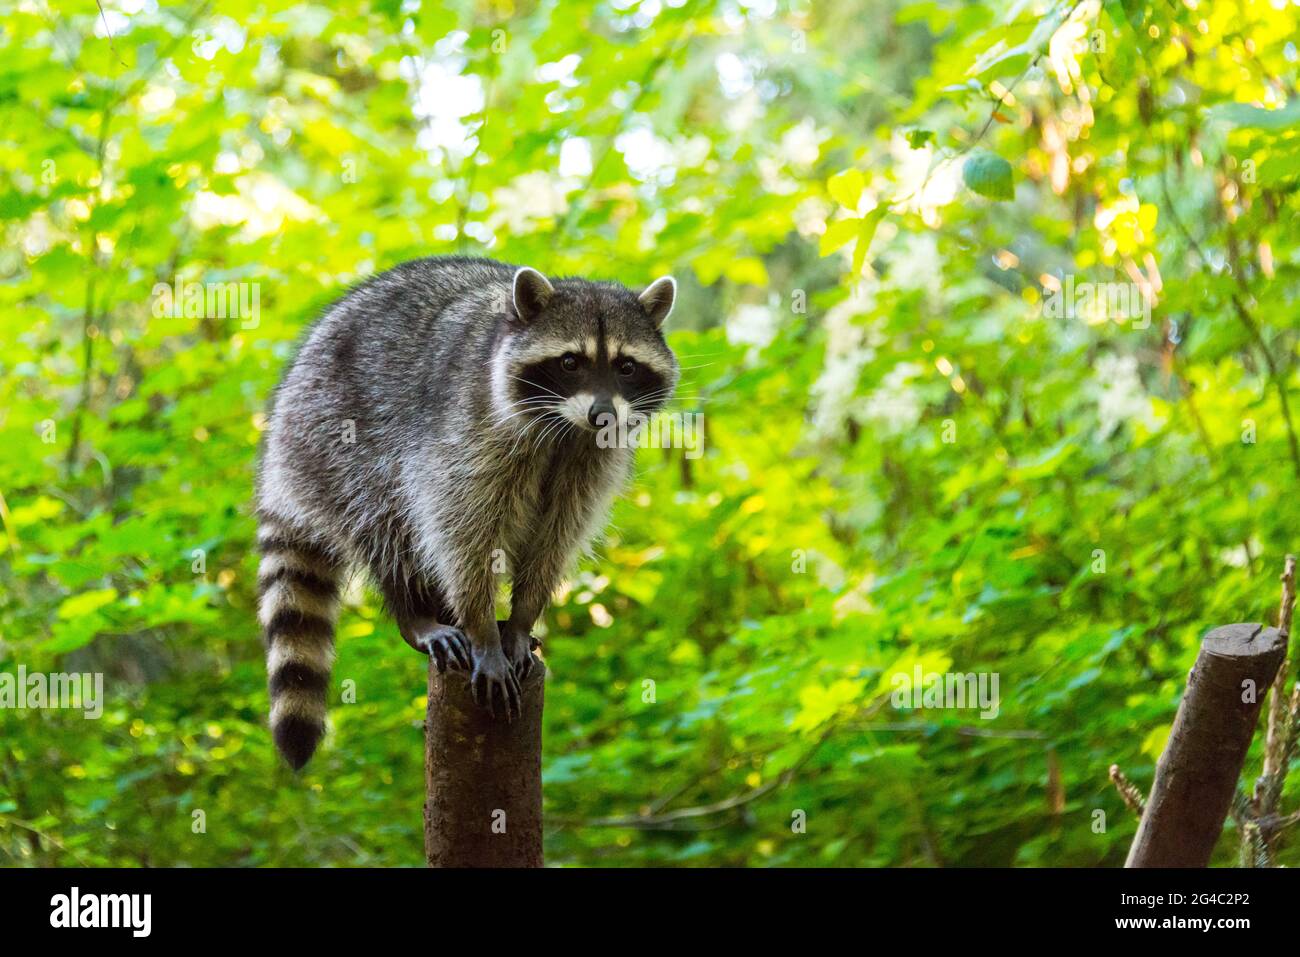 A North American Raccoon Stock Photo